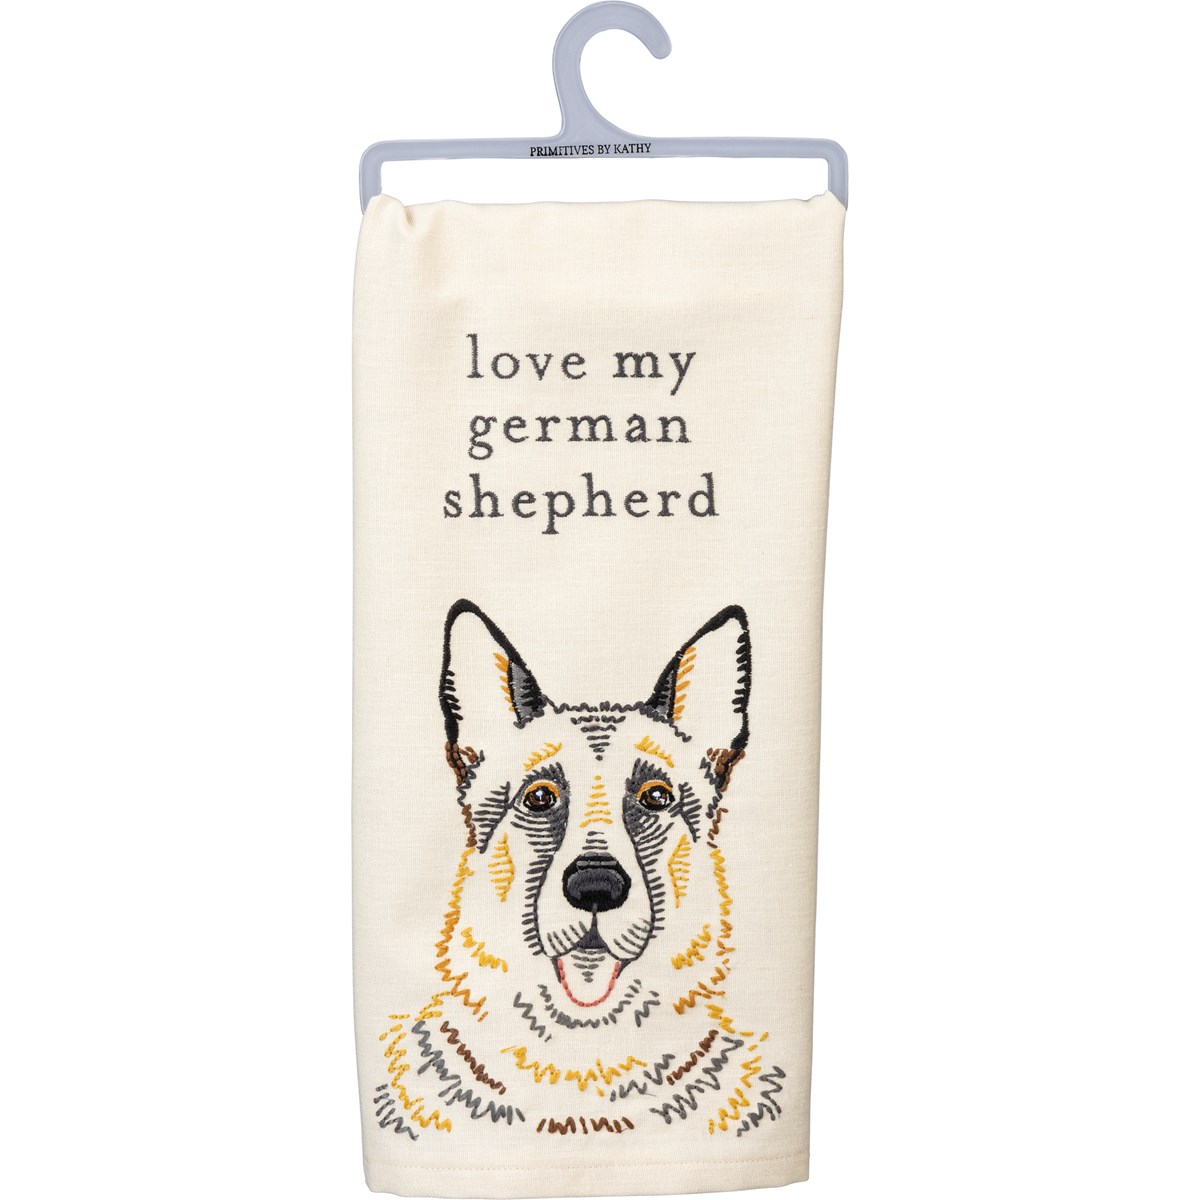 Love My German Shepherd Kitchen Towel - Cotton, Linen